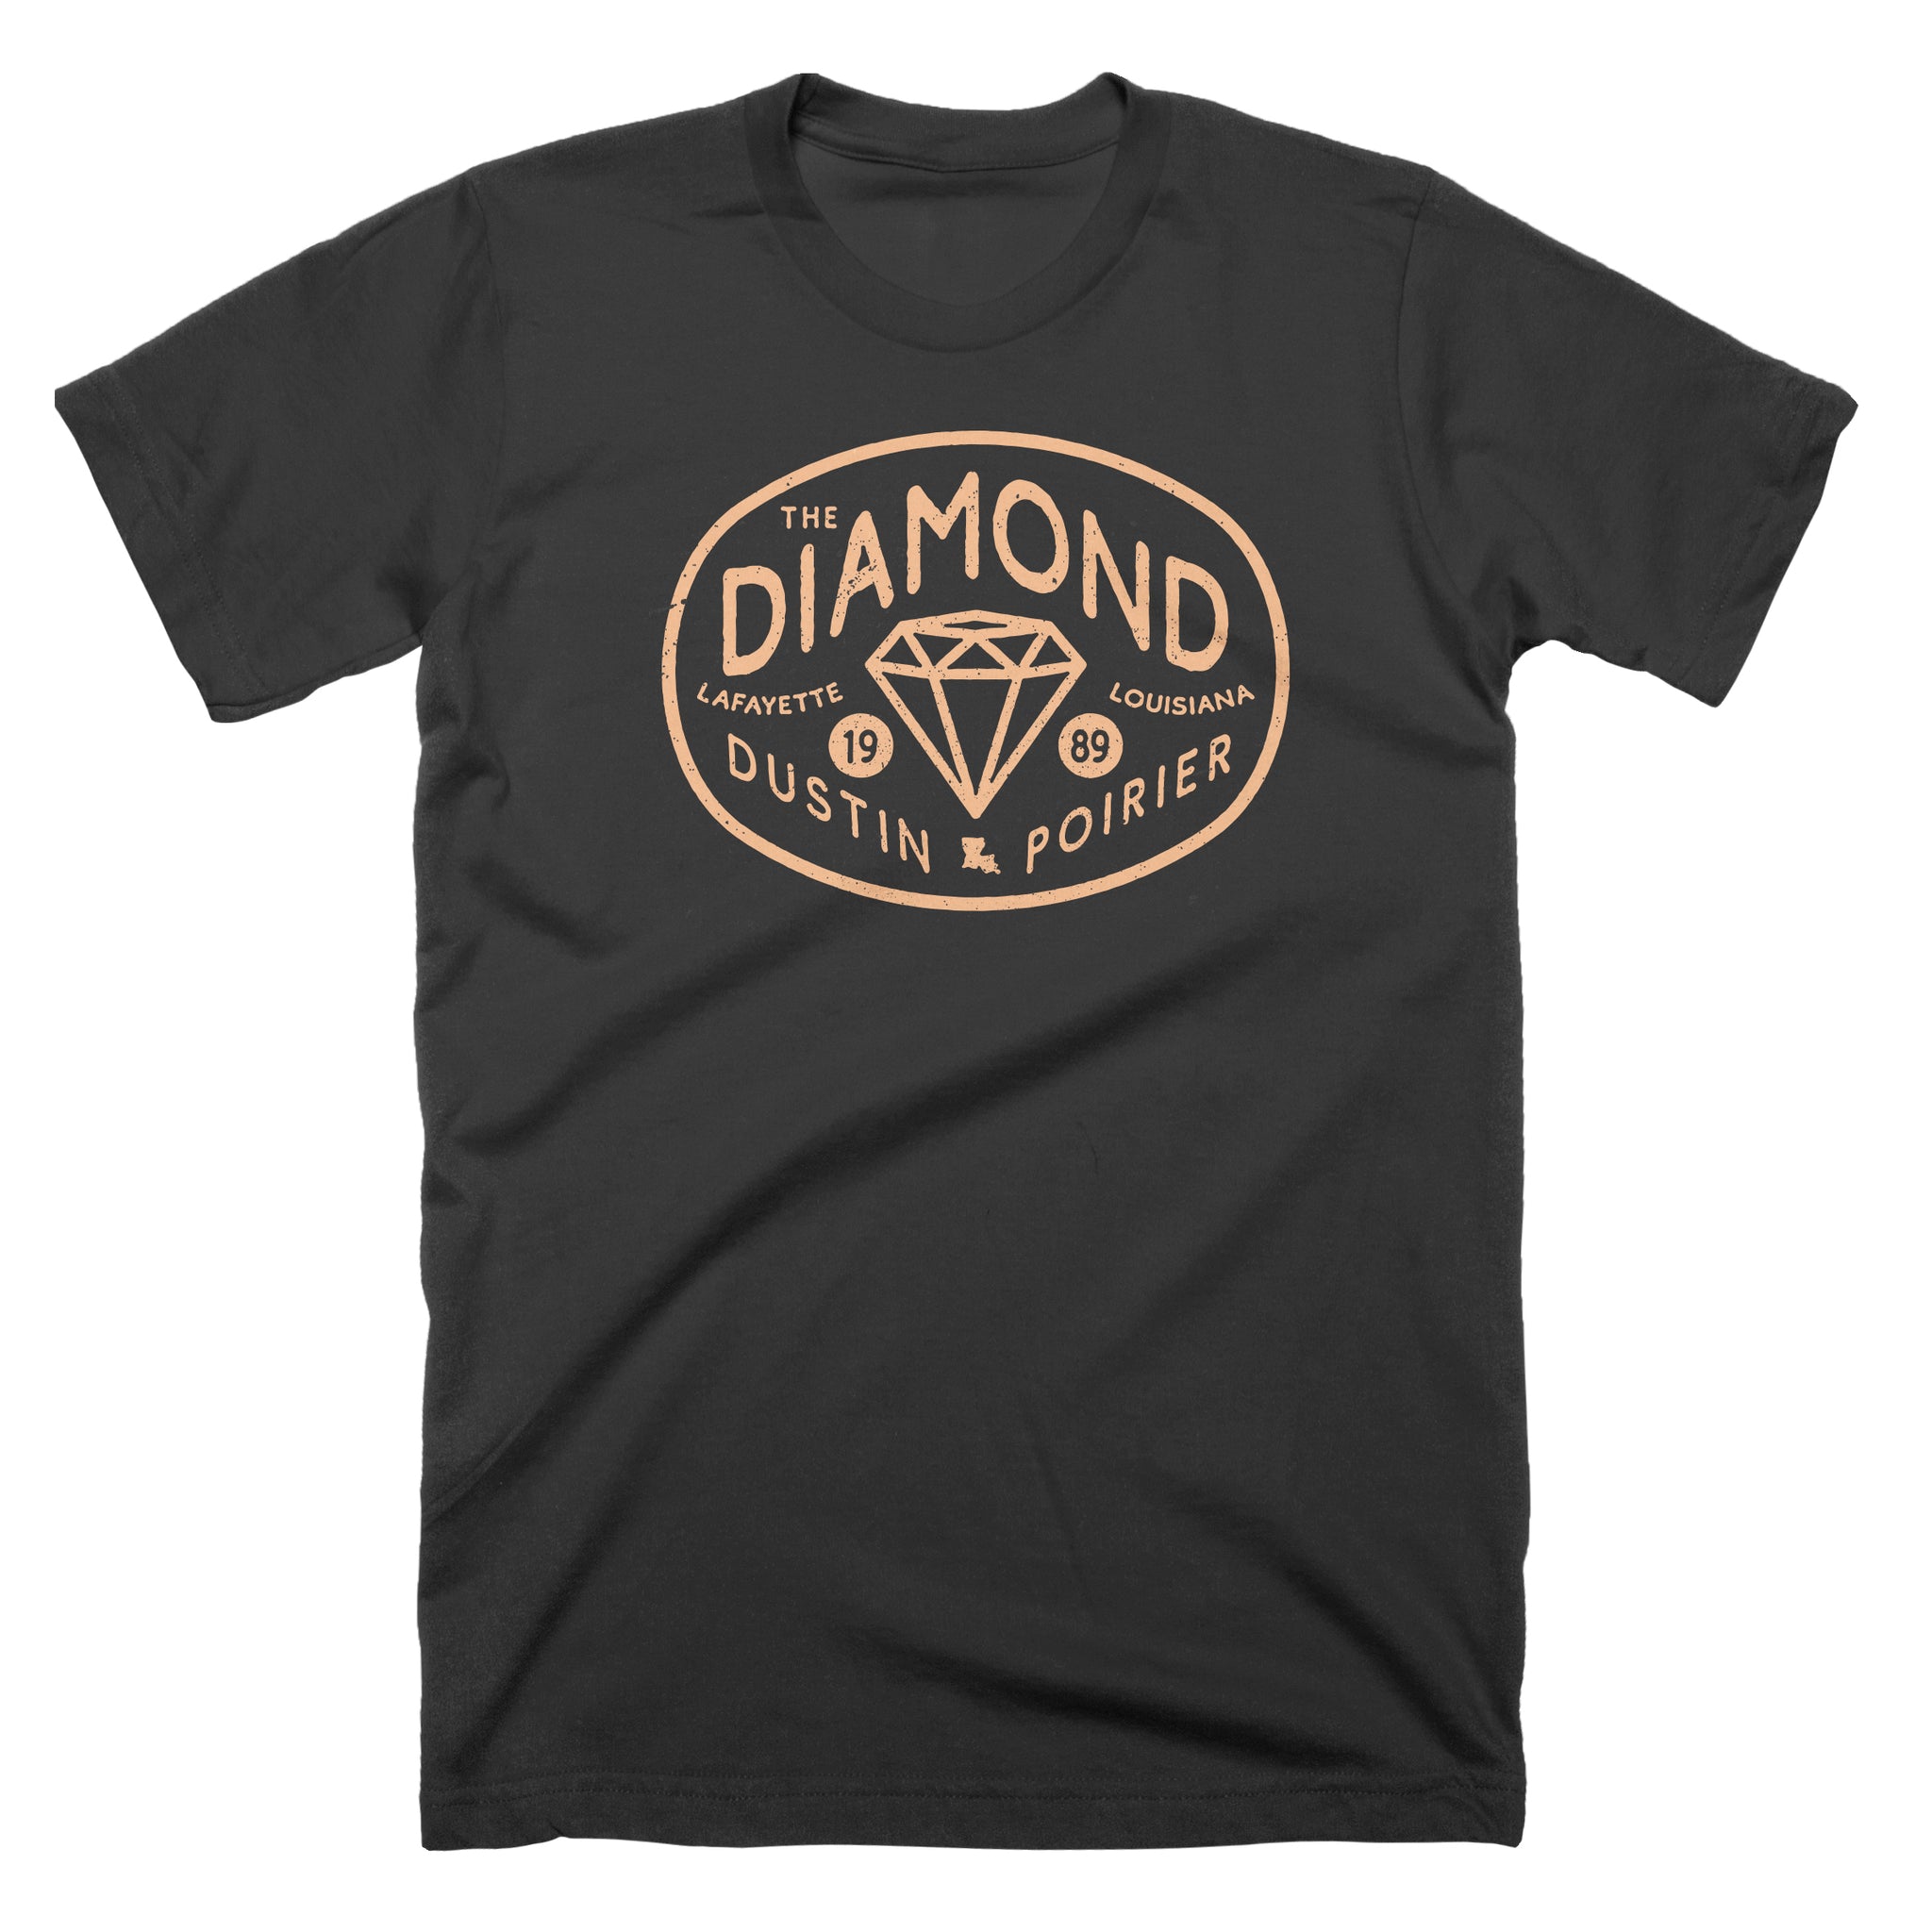 The Diamond Wordmark